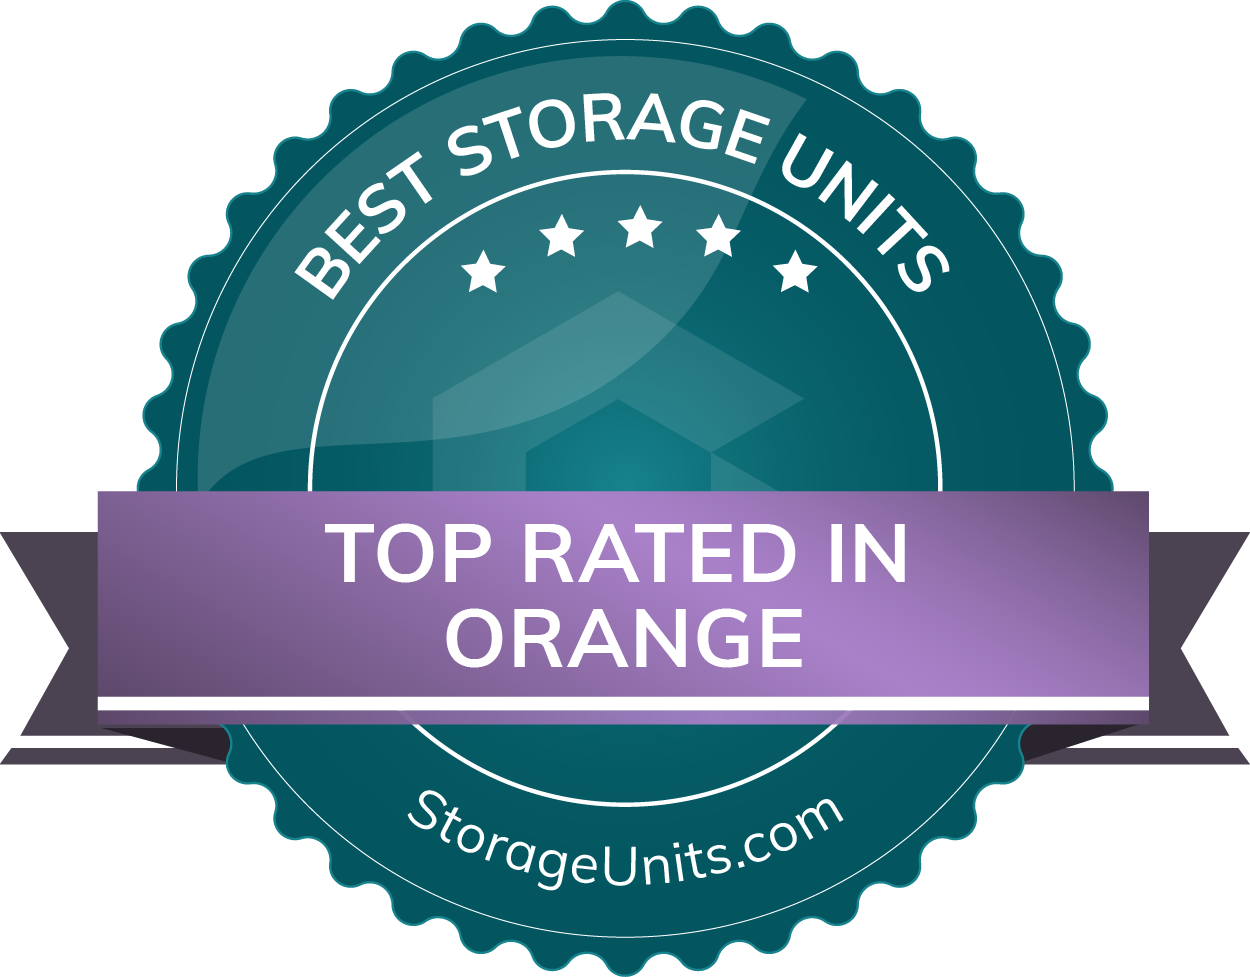 Best Self Storage Units in Orange, California of 2022